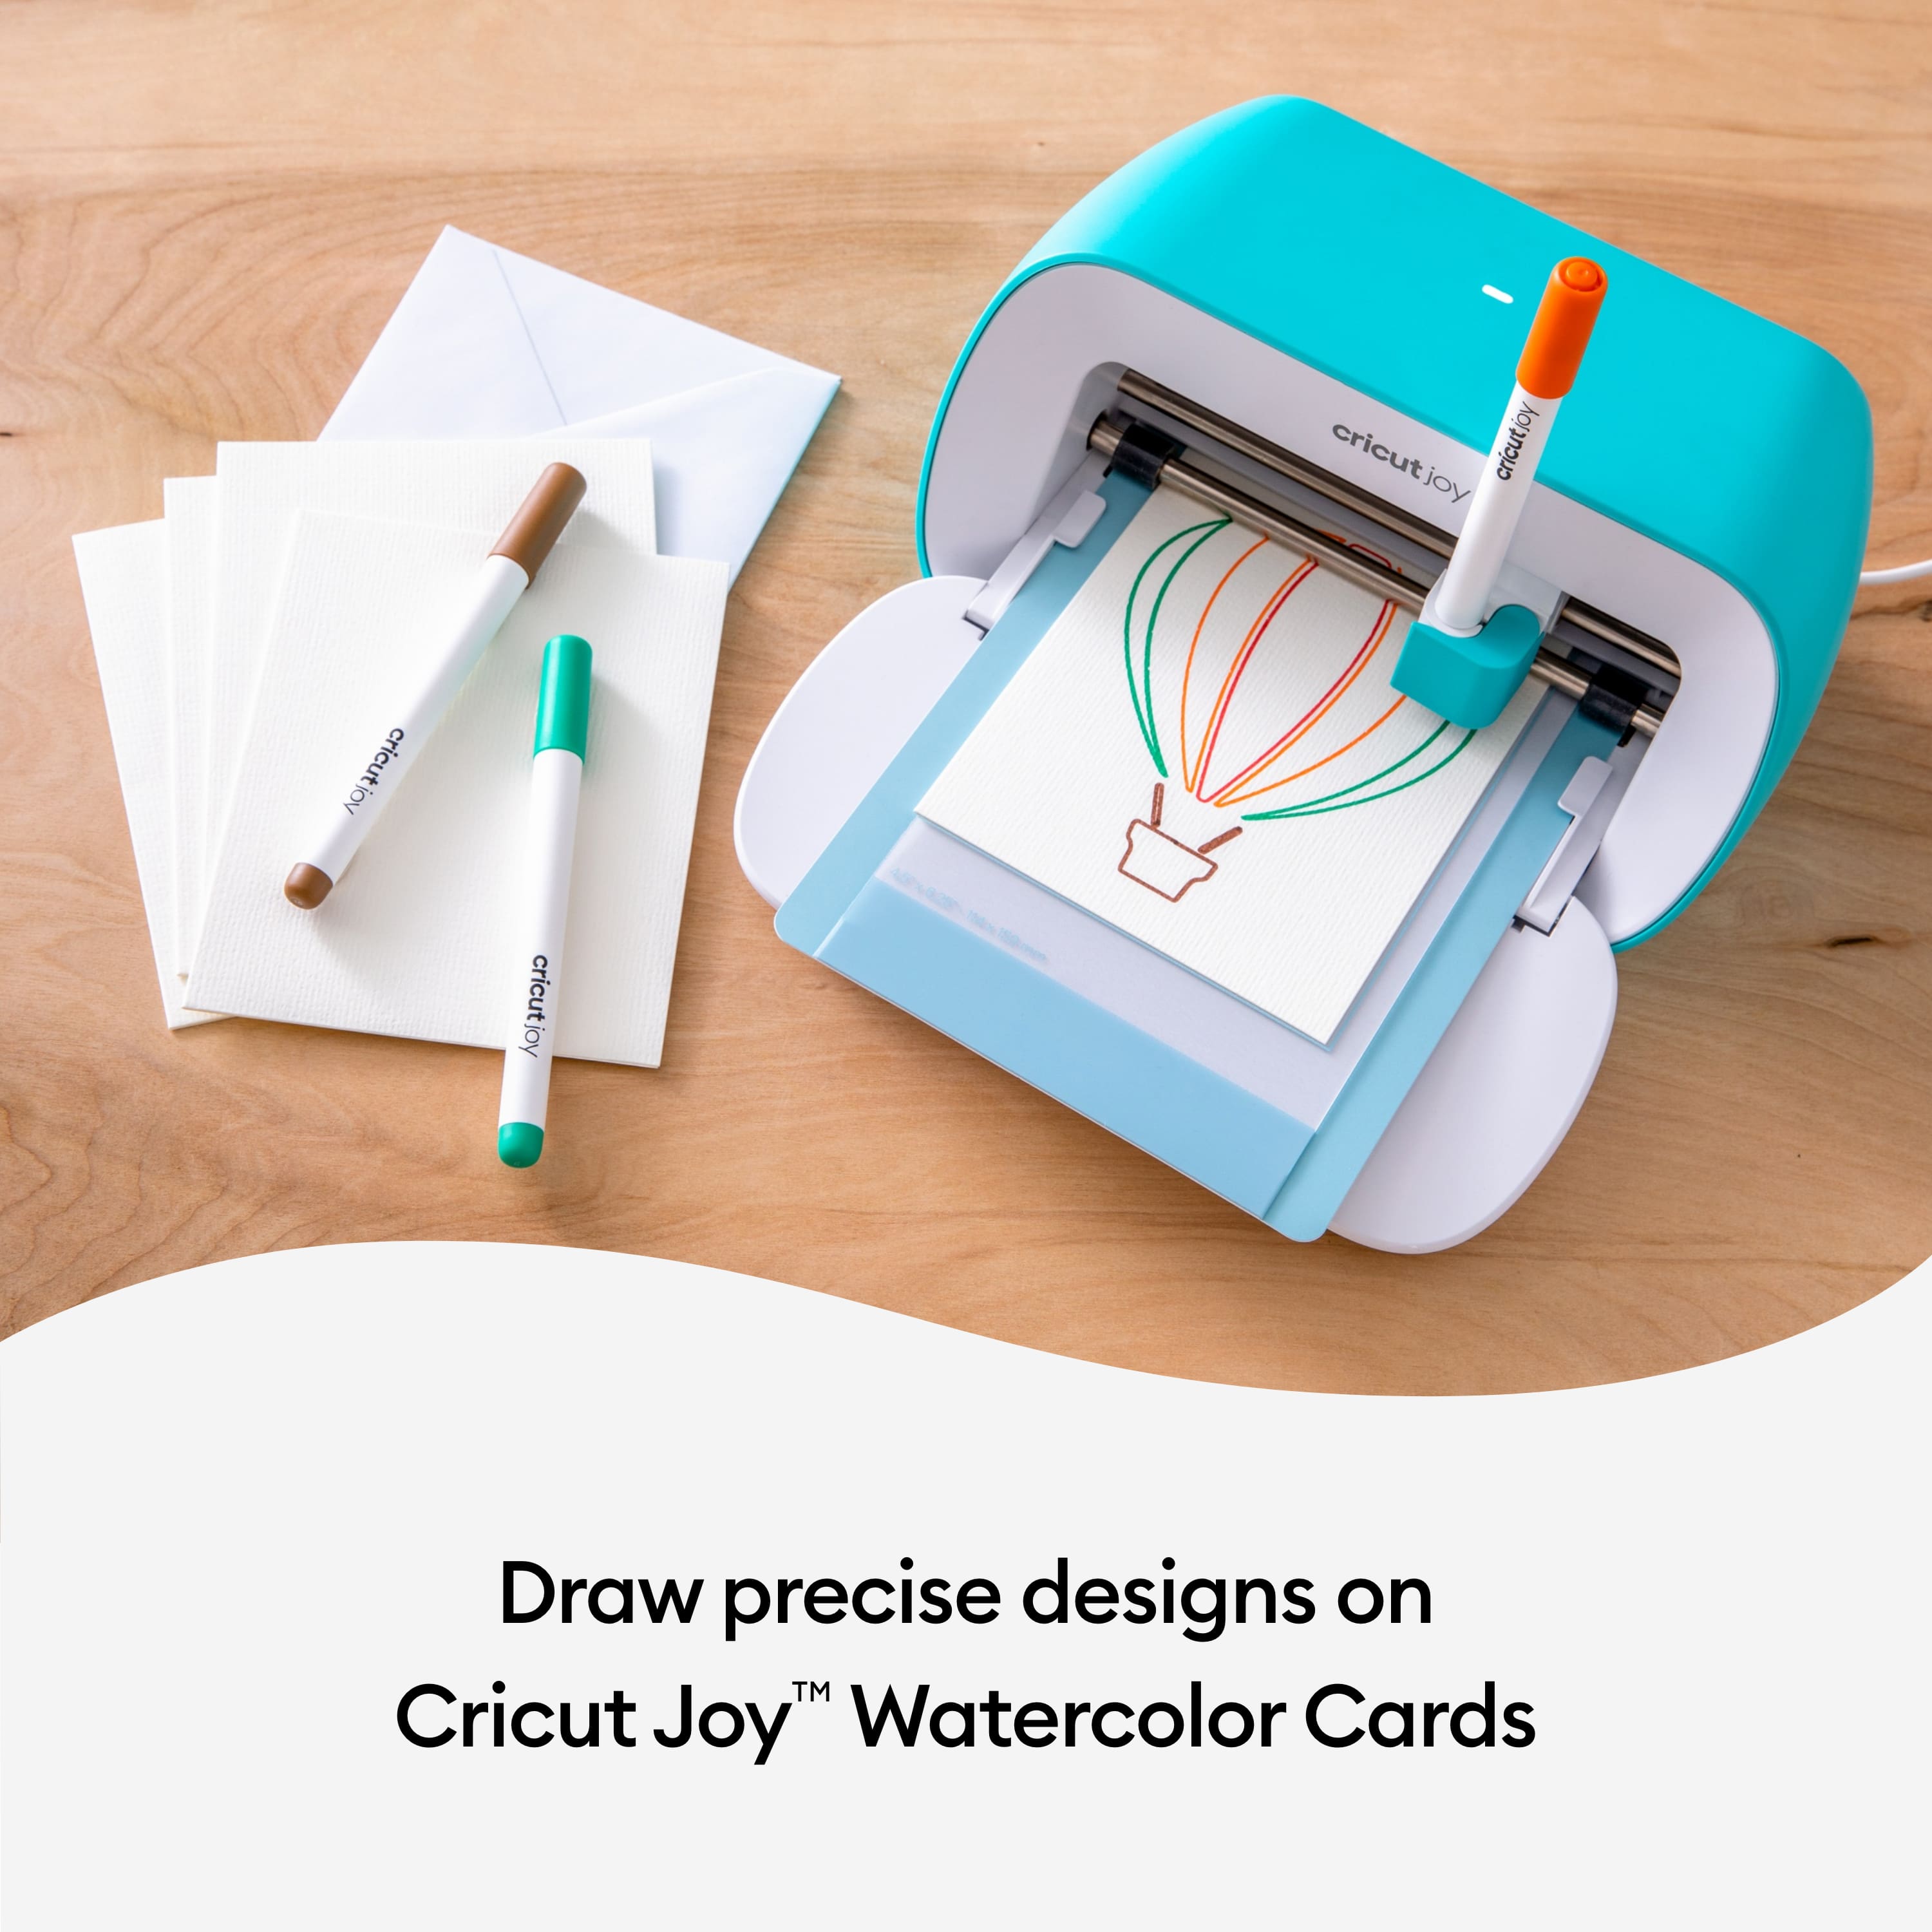 Cricut Joy&#x2122; Watercolor Marker &#x26; Brush Set